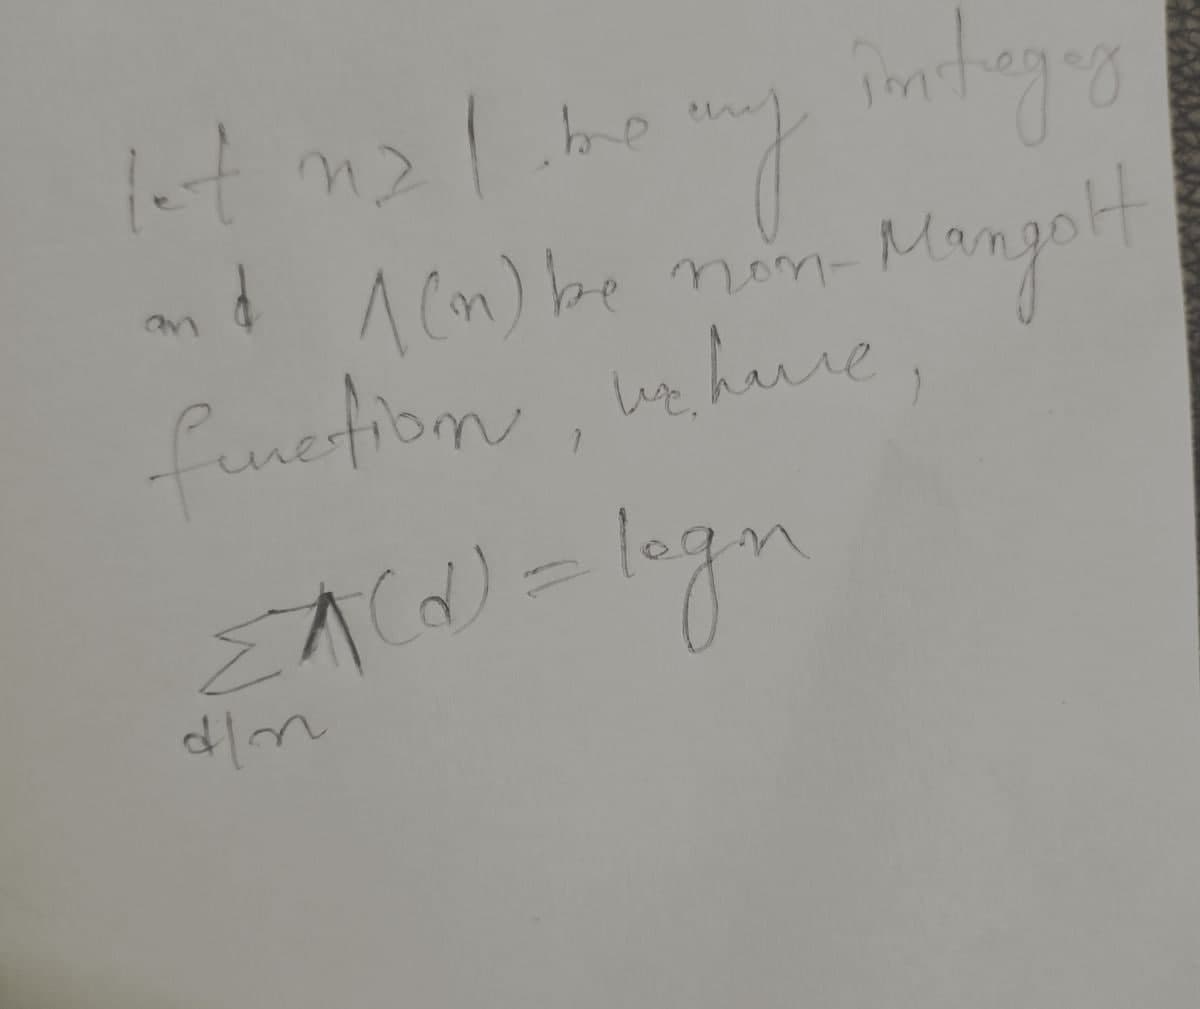 imitregaz
nom-Mangott
let na libe
be my
and 1(n) be
function, we have
EA (d) = logn
din